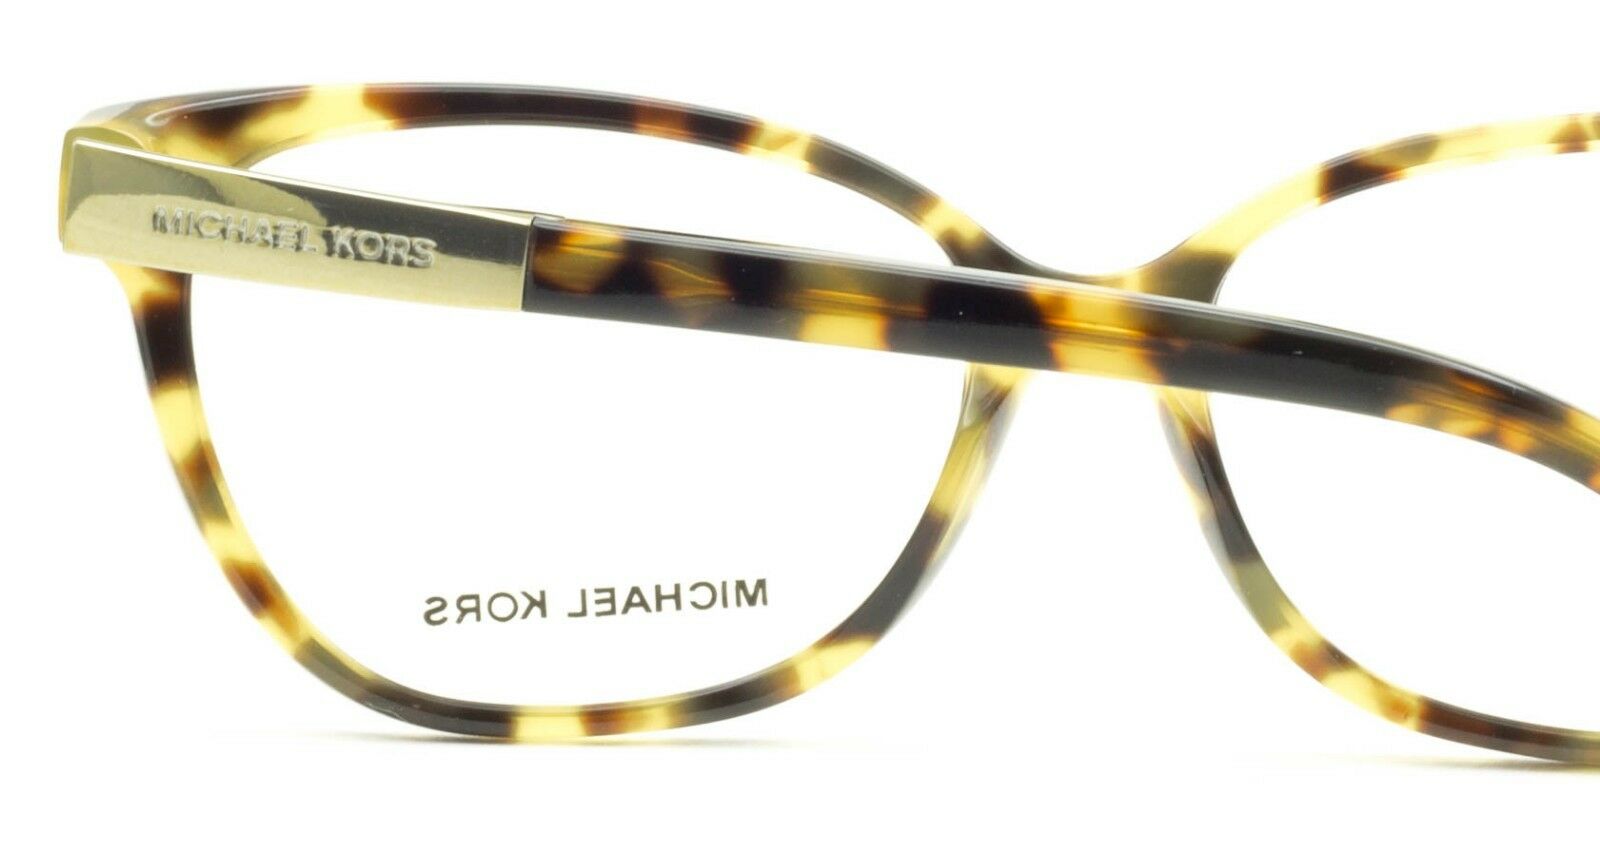 MICHAEL KORS MK 4029 3119 Adelaide III Eyewear FRAMES RX Optical Glasses - New